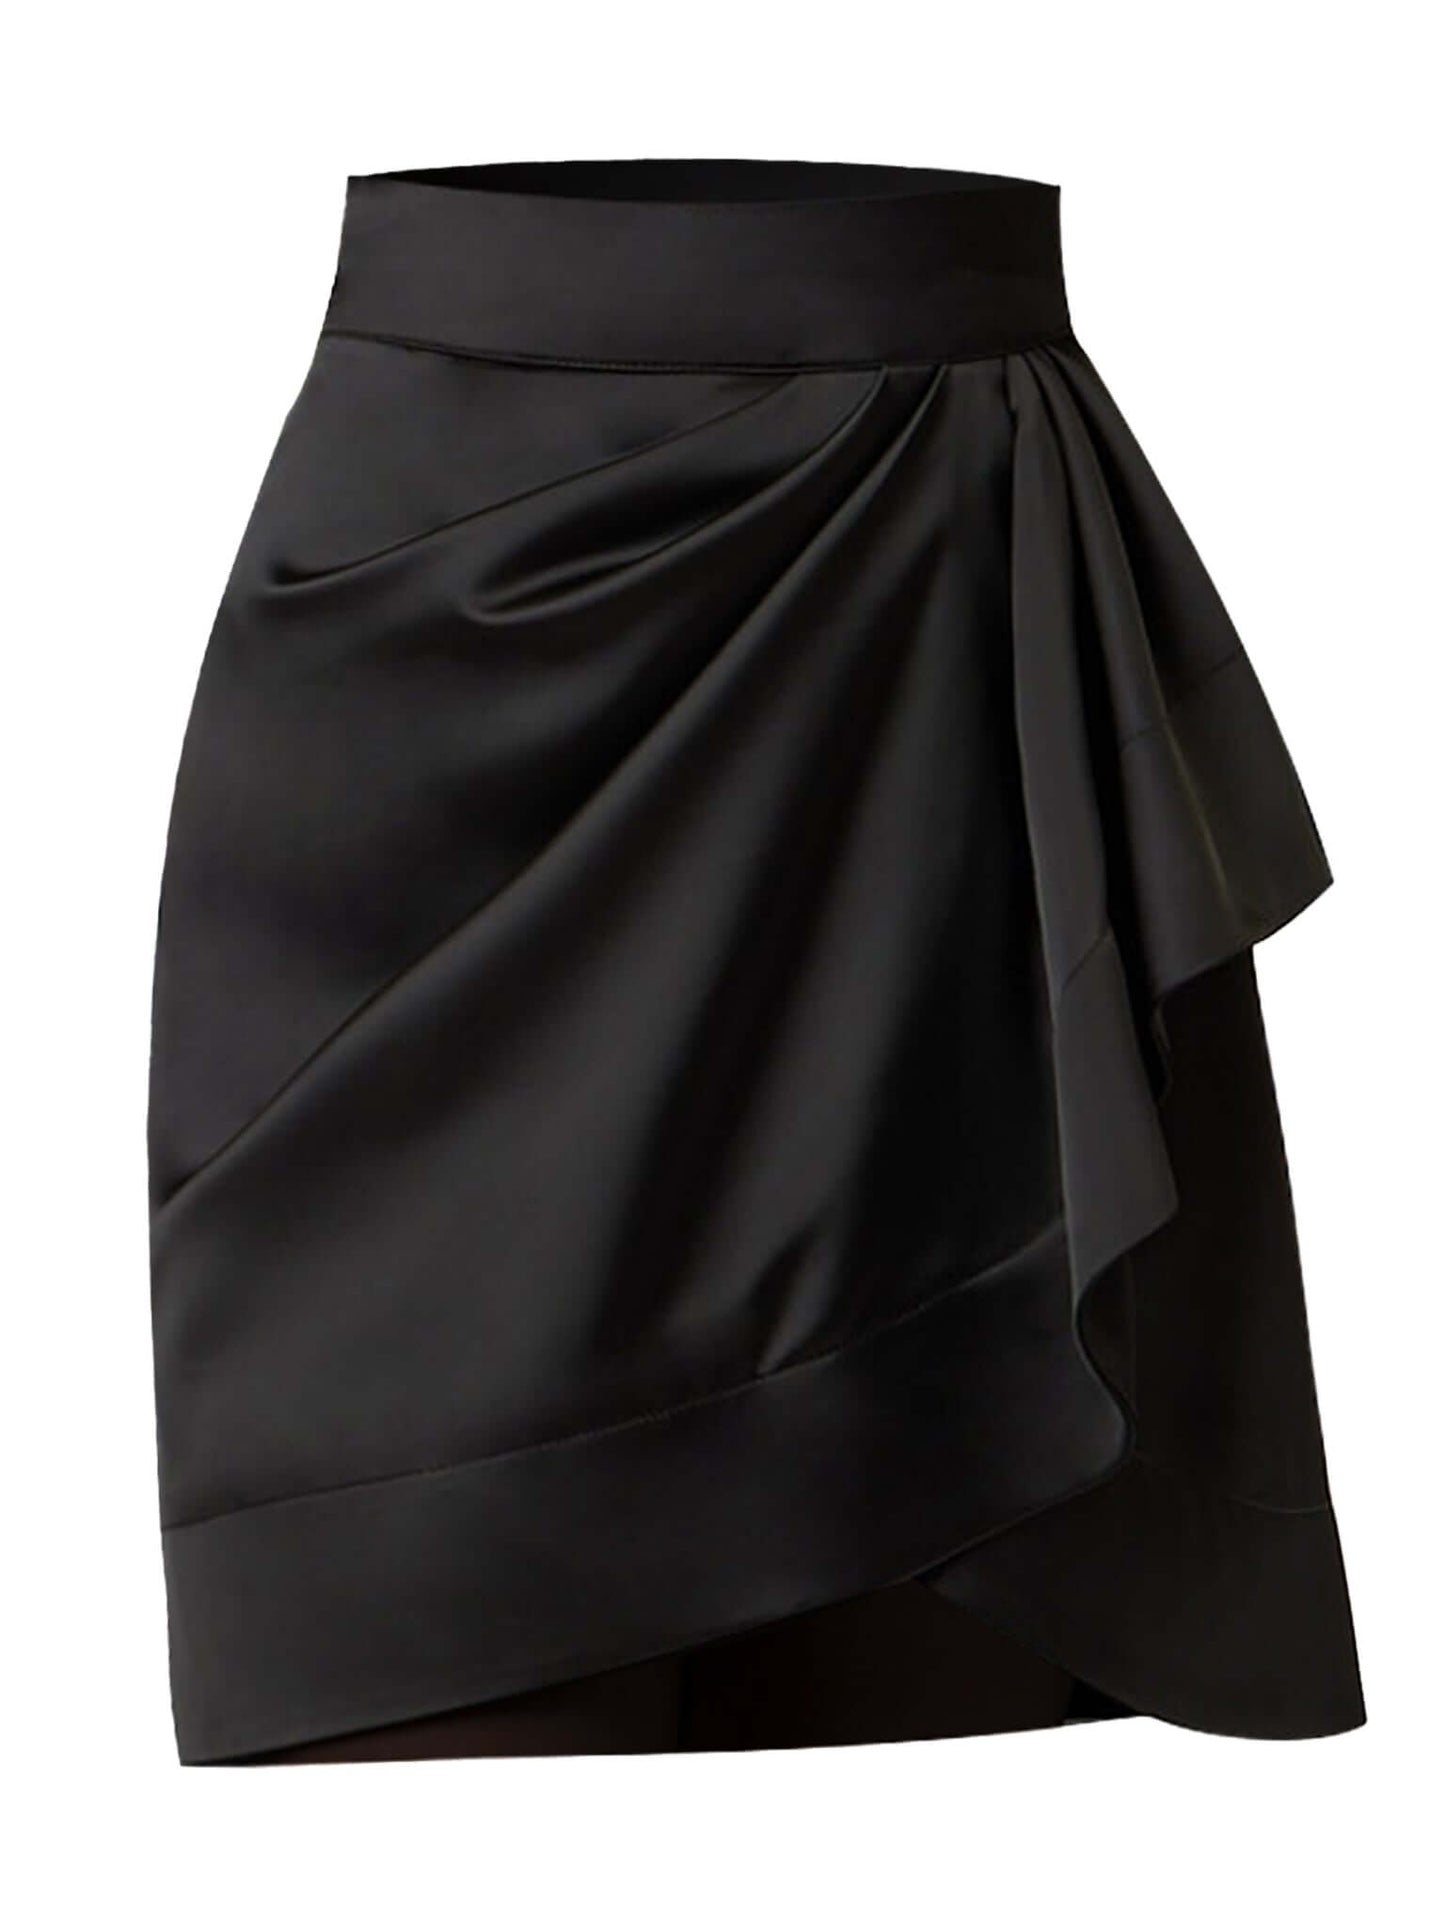 Meet Me Tonight Draped Satin Skirt by Tia Dorraine Women's Luxury Fashion Designer Clothing Brand